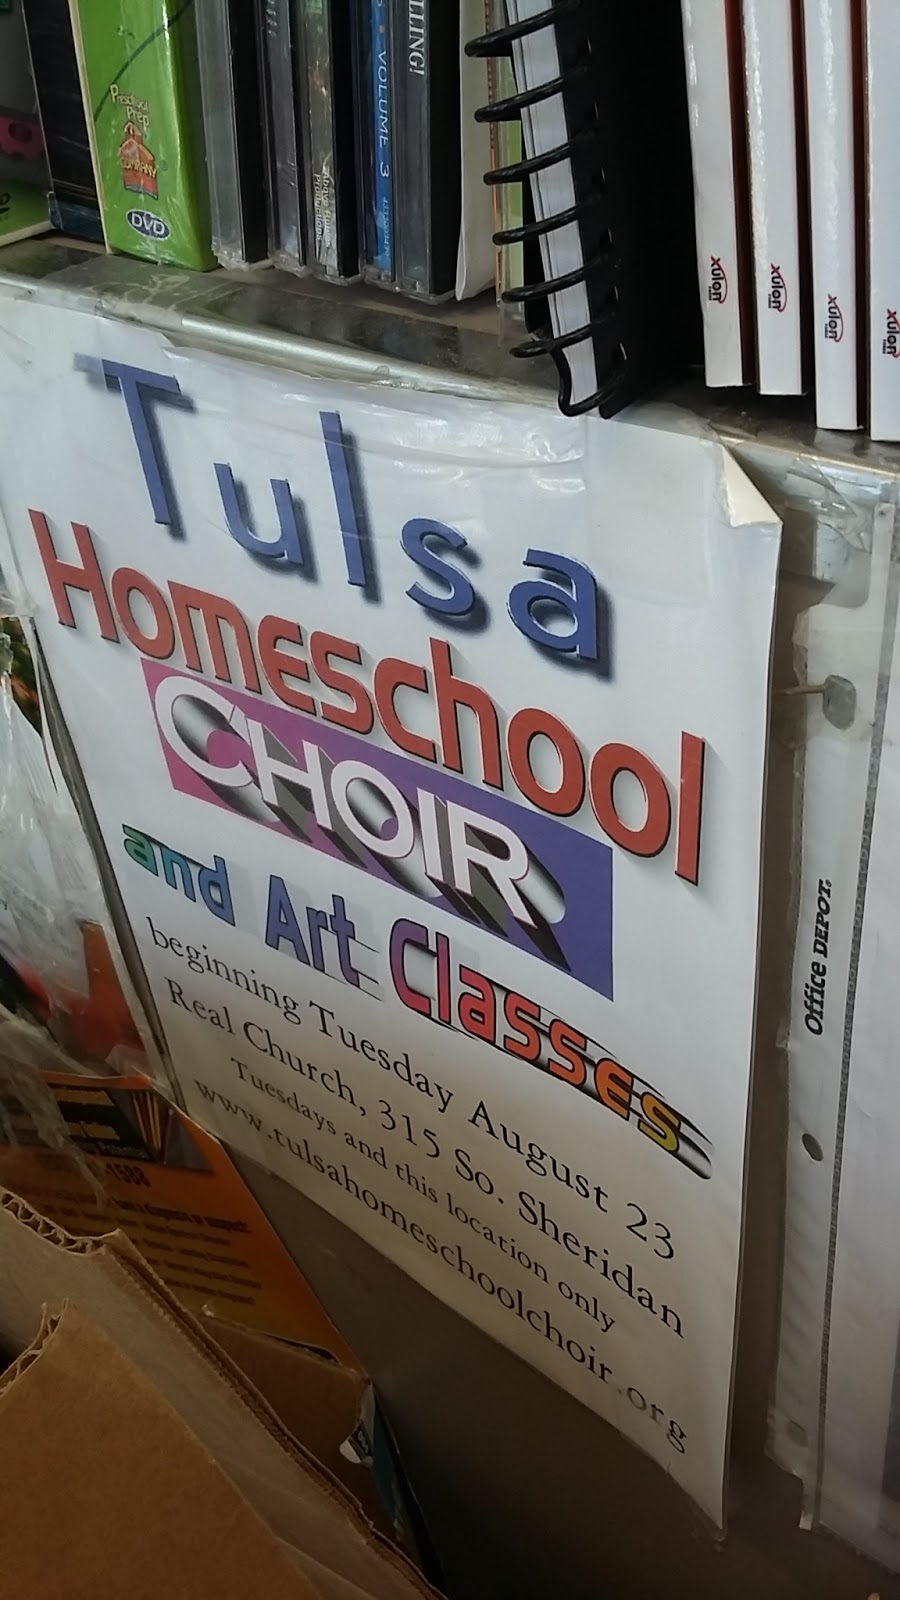 Bibliomania Homeschool Materials | 12929 E 21st St suite i, Tulsa, OK 74134, USA | Phone: (918) 438-9889